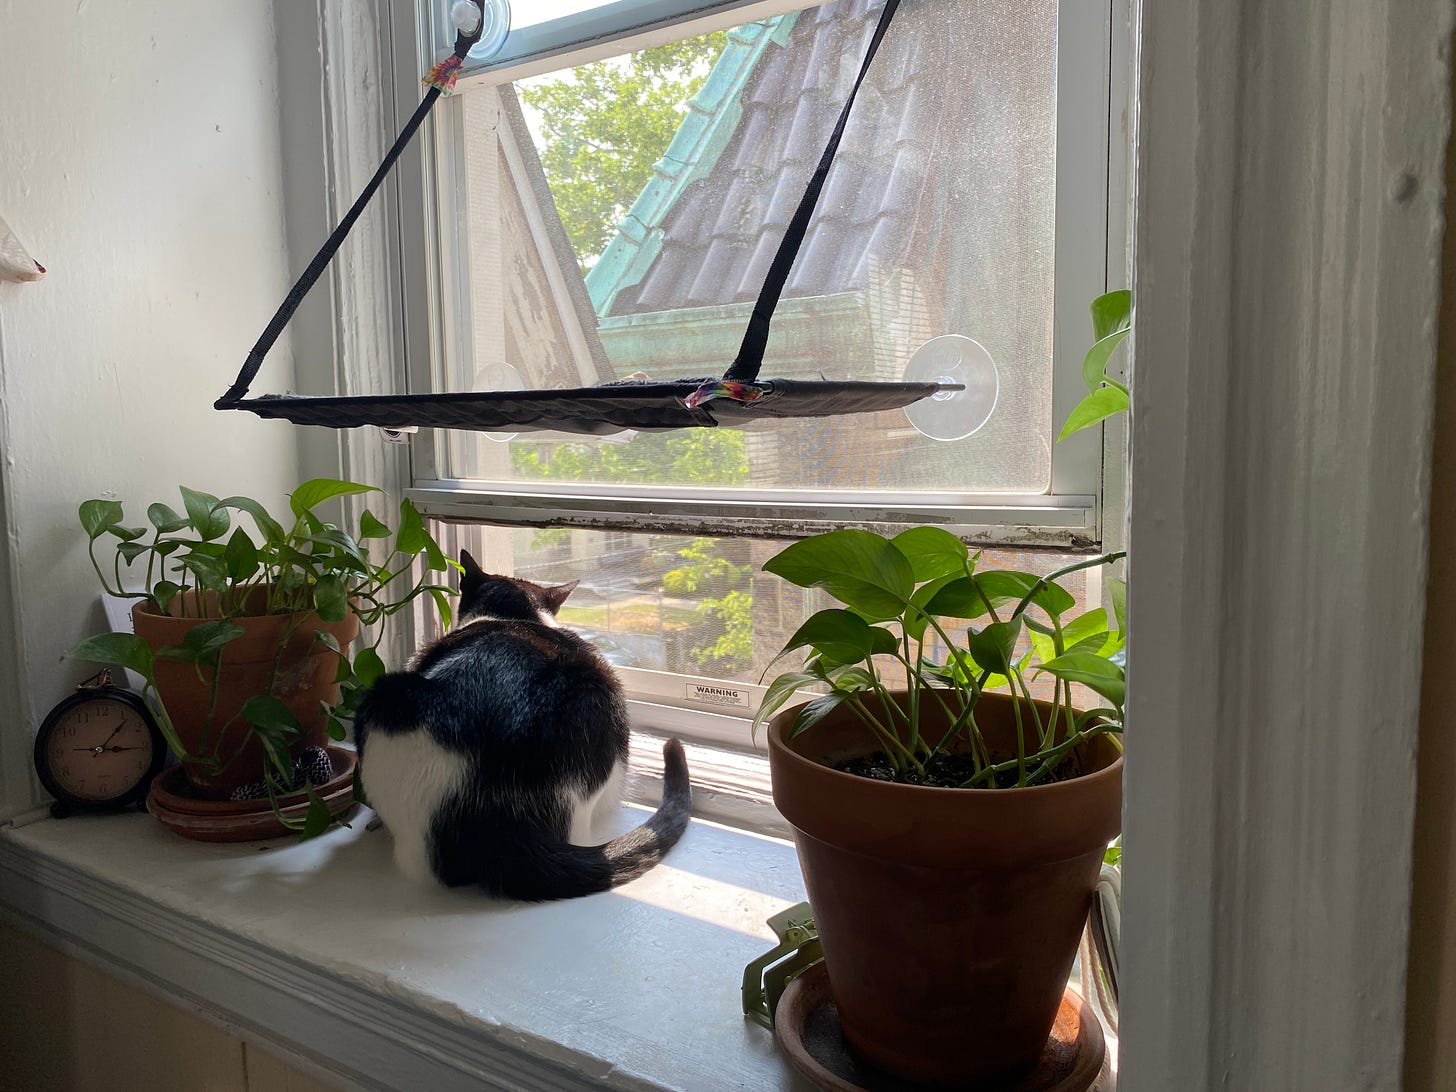 Apollo in the windowsill watching birds